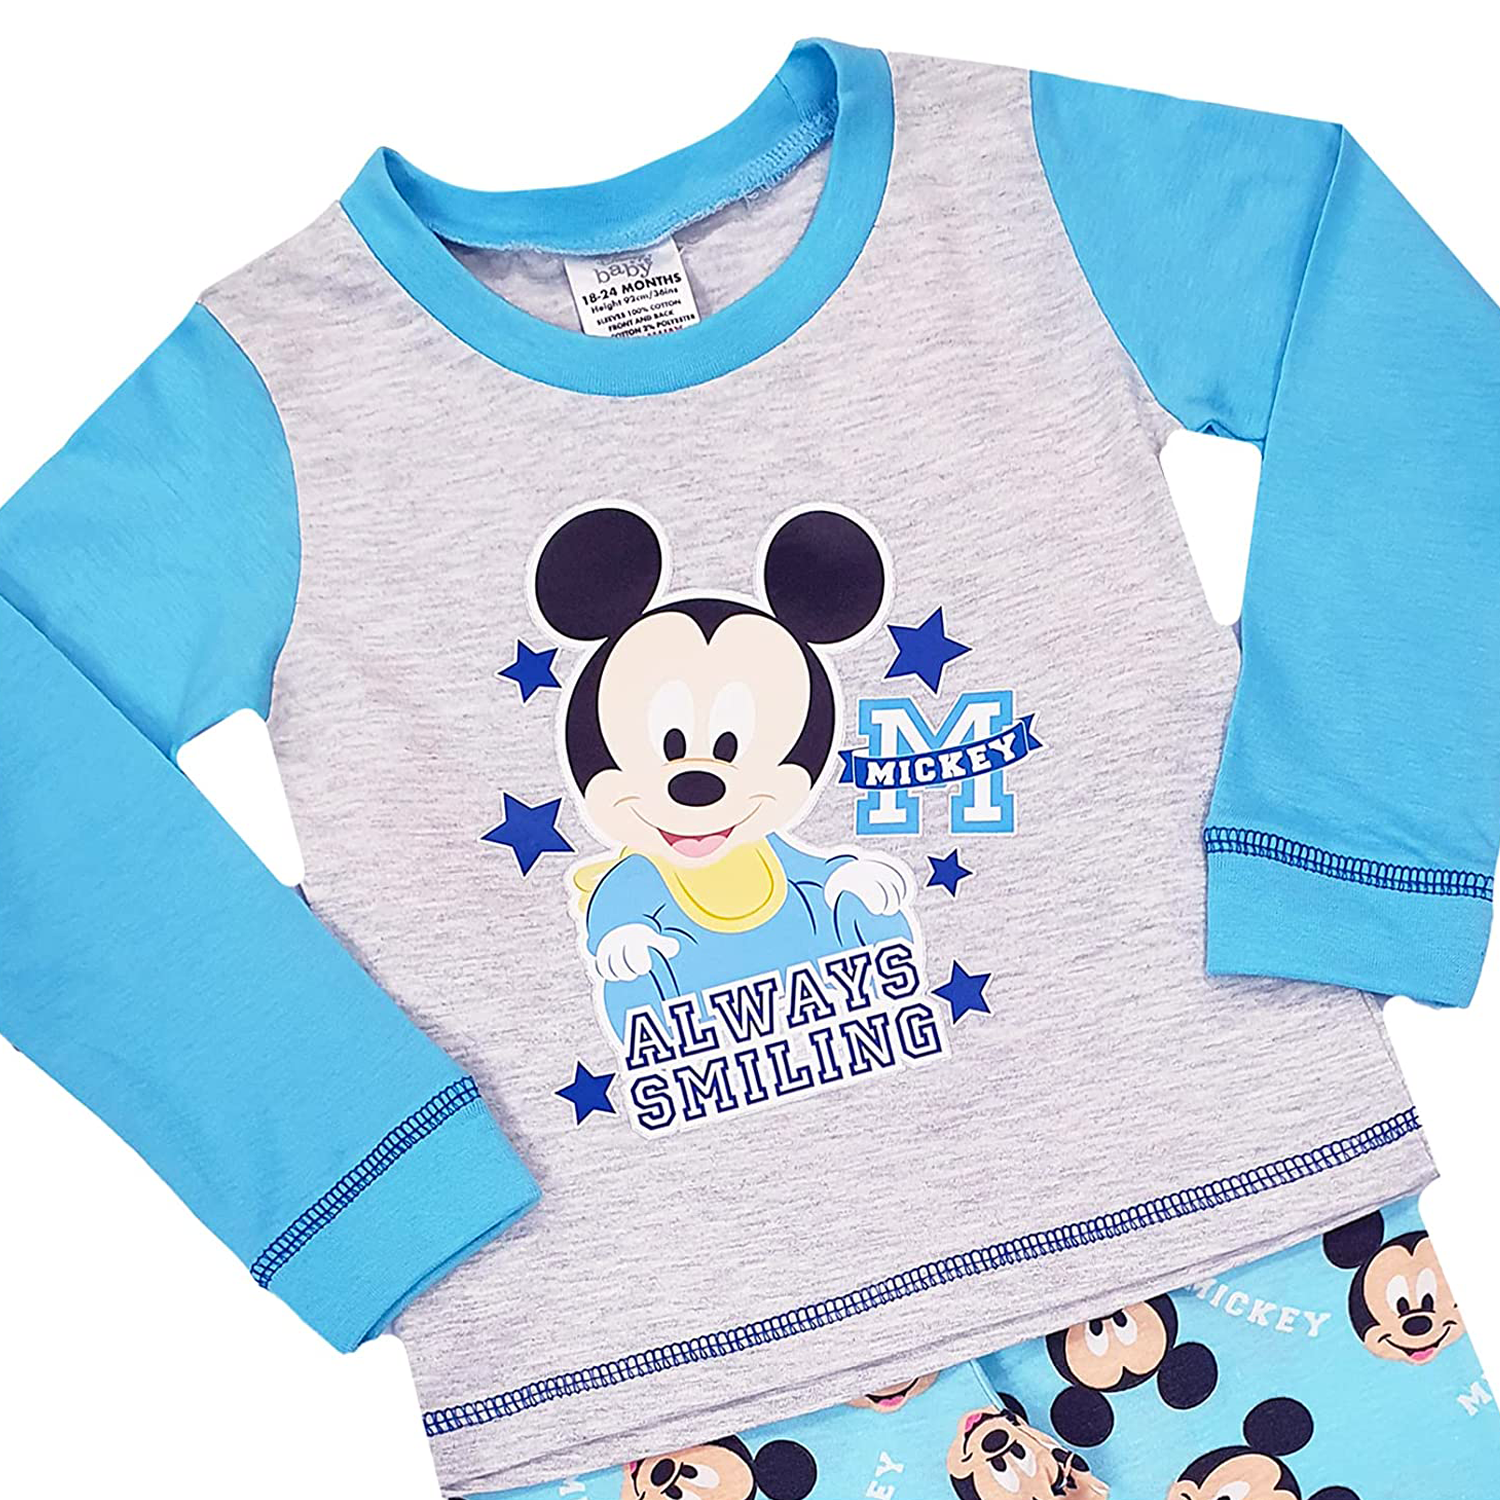 Baby Mickey Always Smiling Baby PJs Set light blue and grey long sleeve pyjamas focus on top